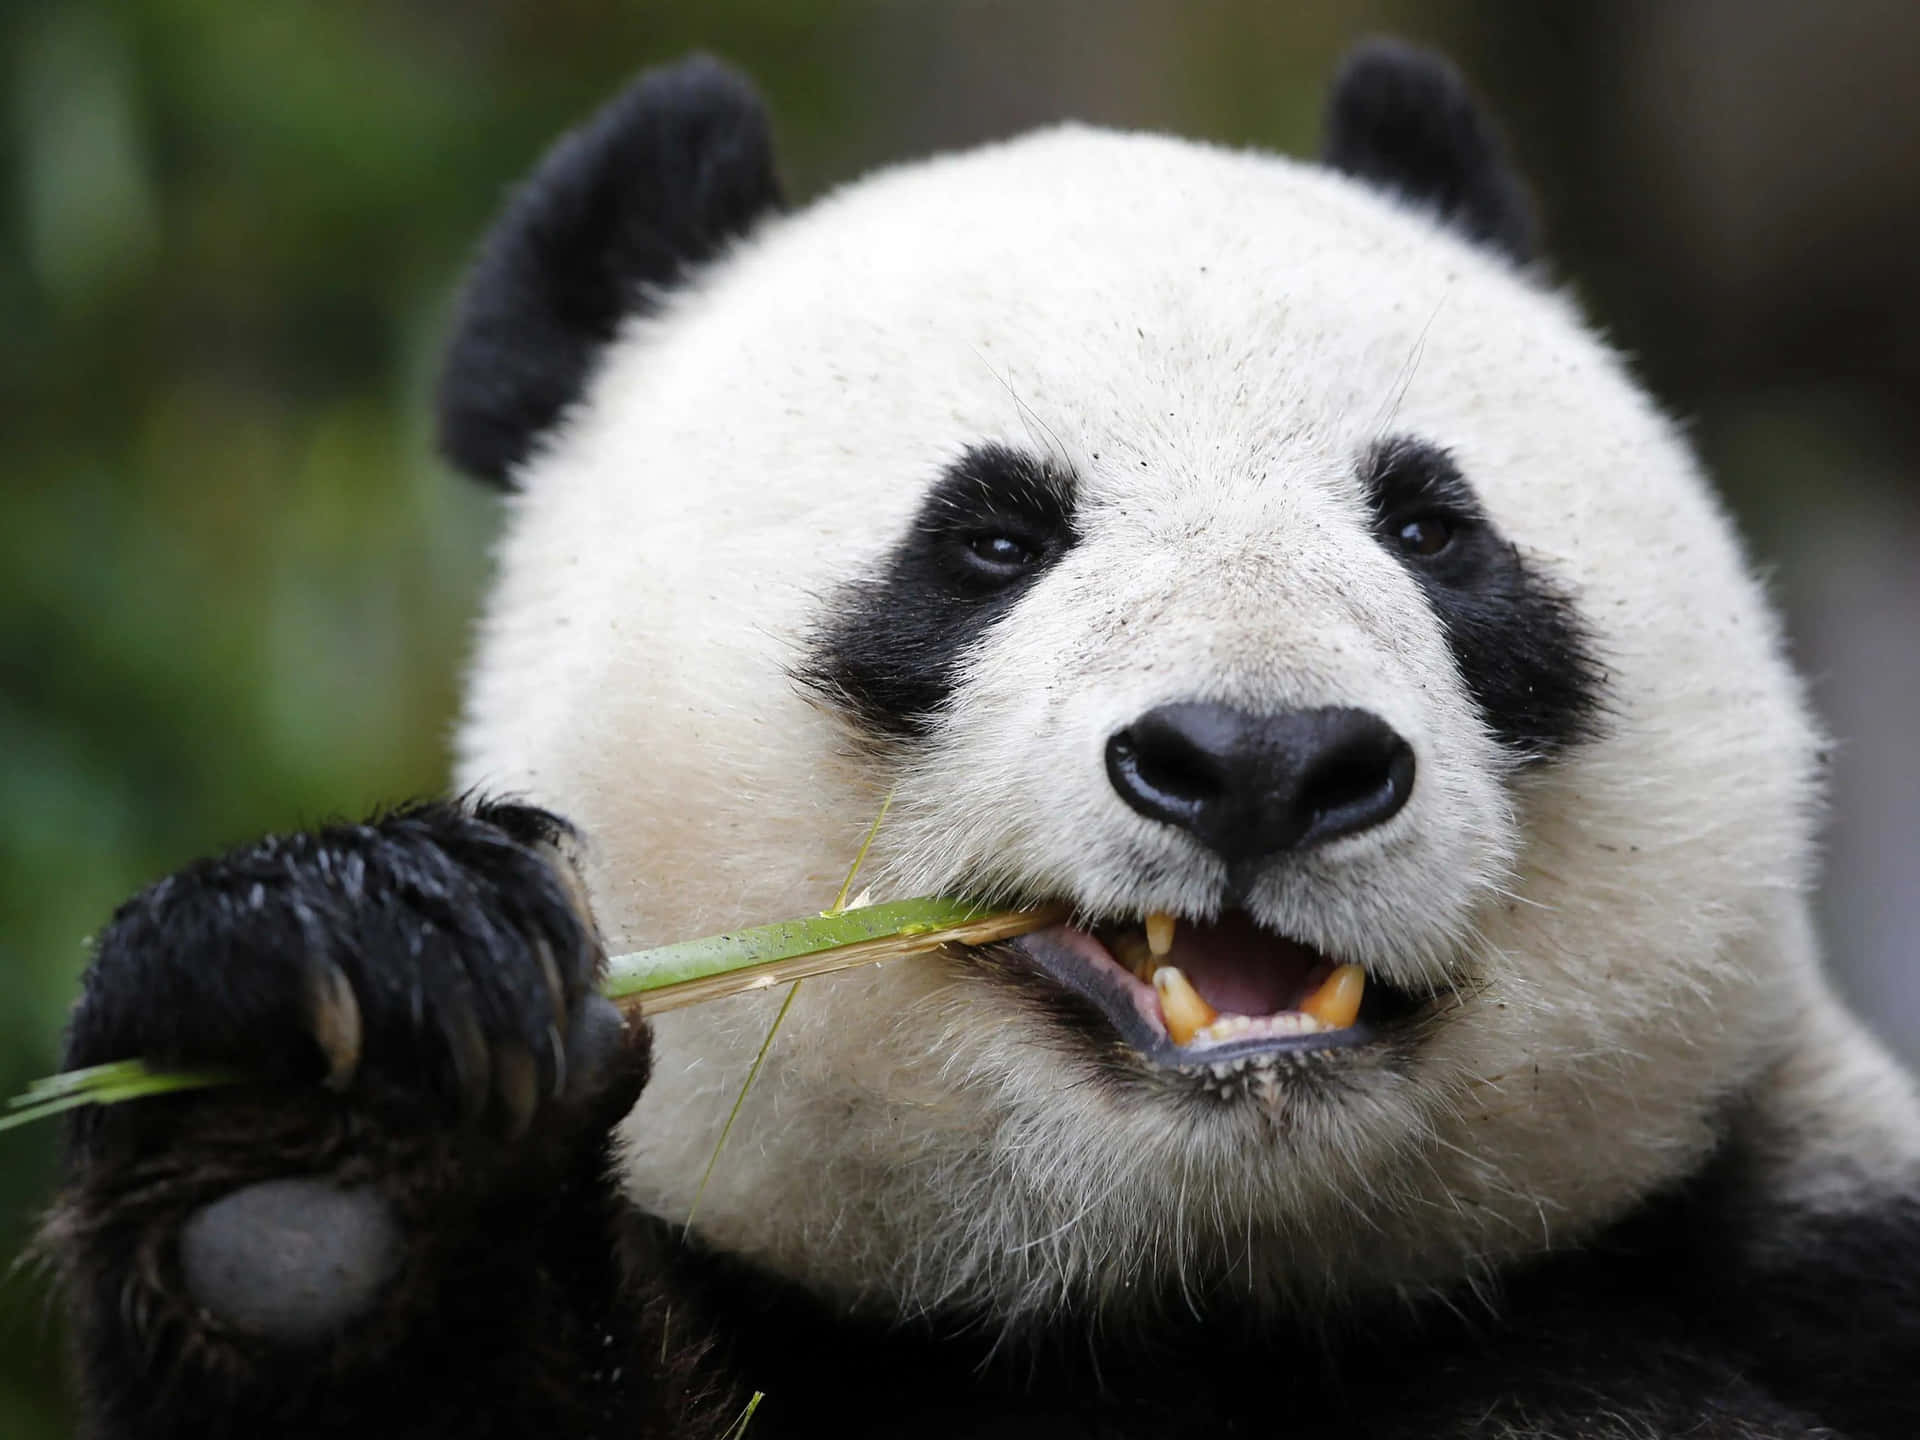 A playful black and white panda bear enjoying a snack in its habitat